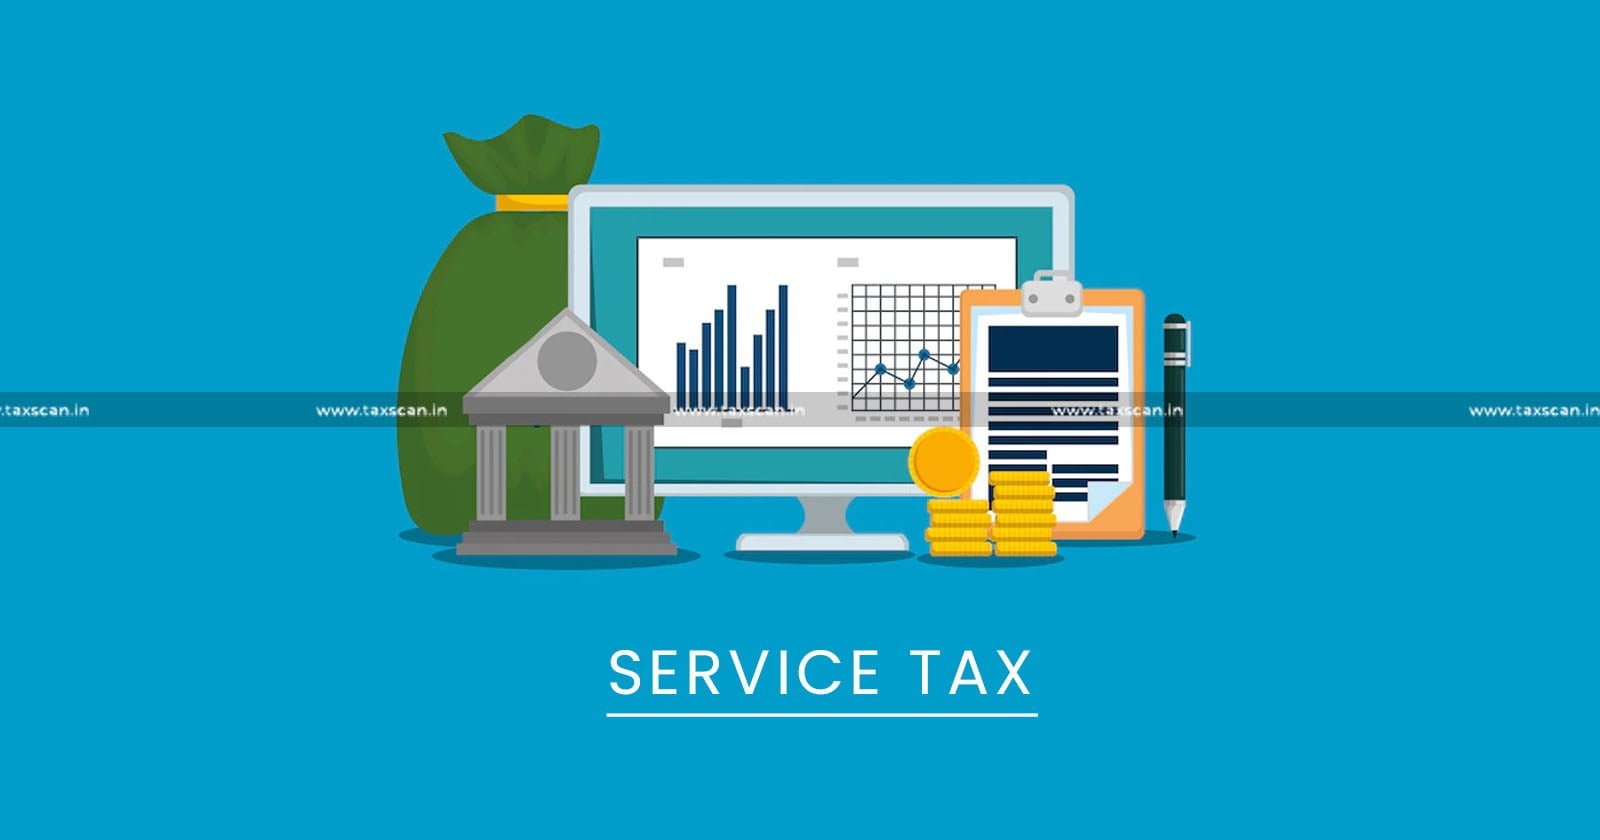 CESTAT - Service Tax - Sale Proceeds - Customs - Excise & Service Tax Appellate Tribunal - CESTAT delhi - taxscan